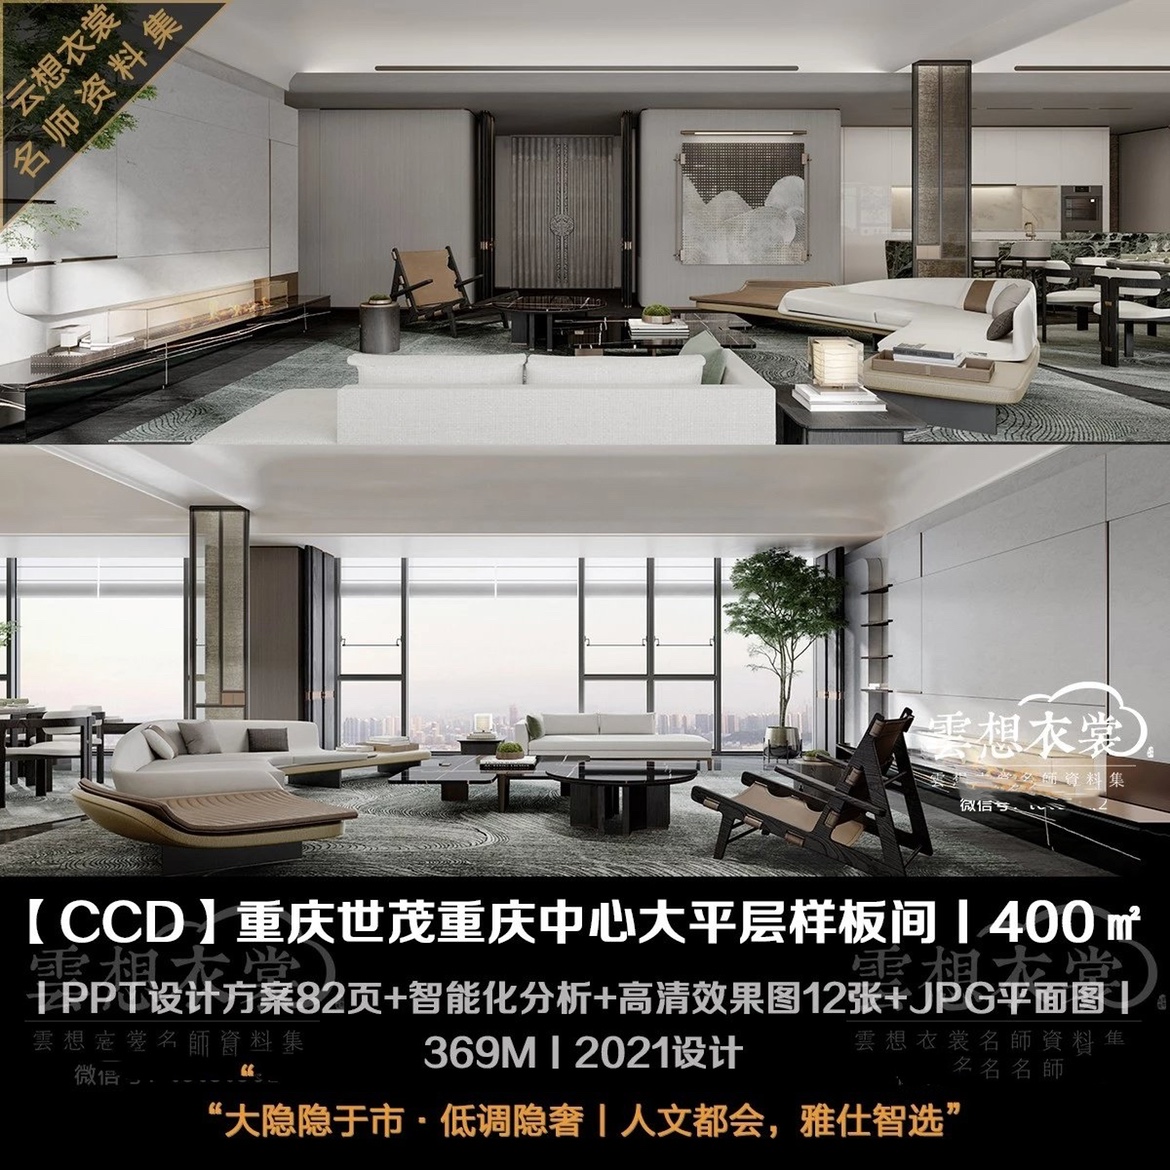 【CCD】世茂重庆中心大平层样板丨PPT设计方案82页+高清效果图